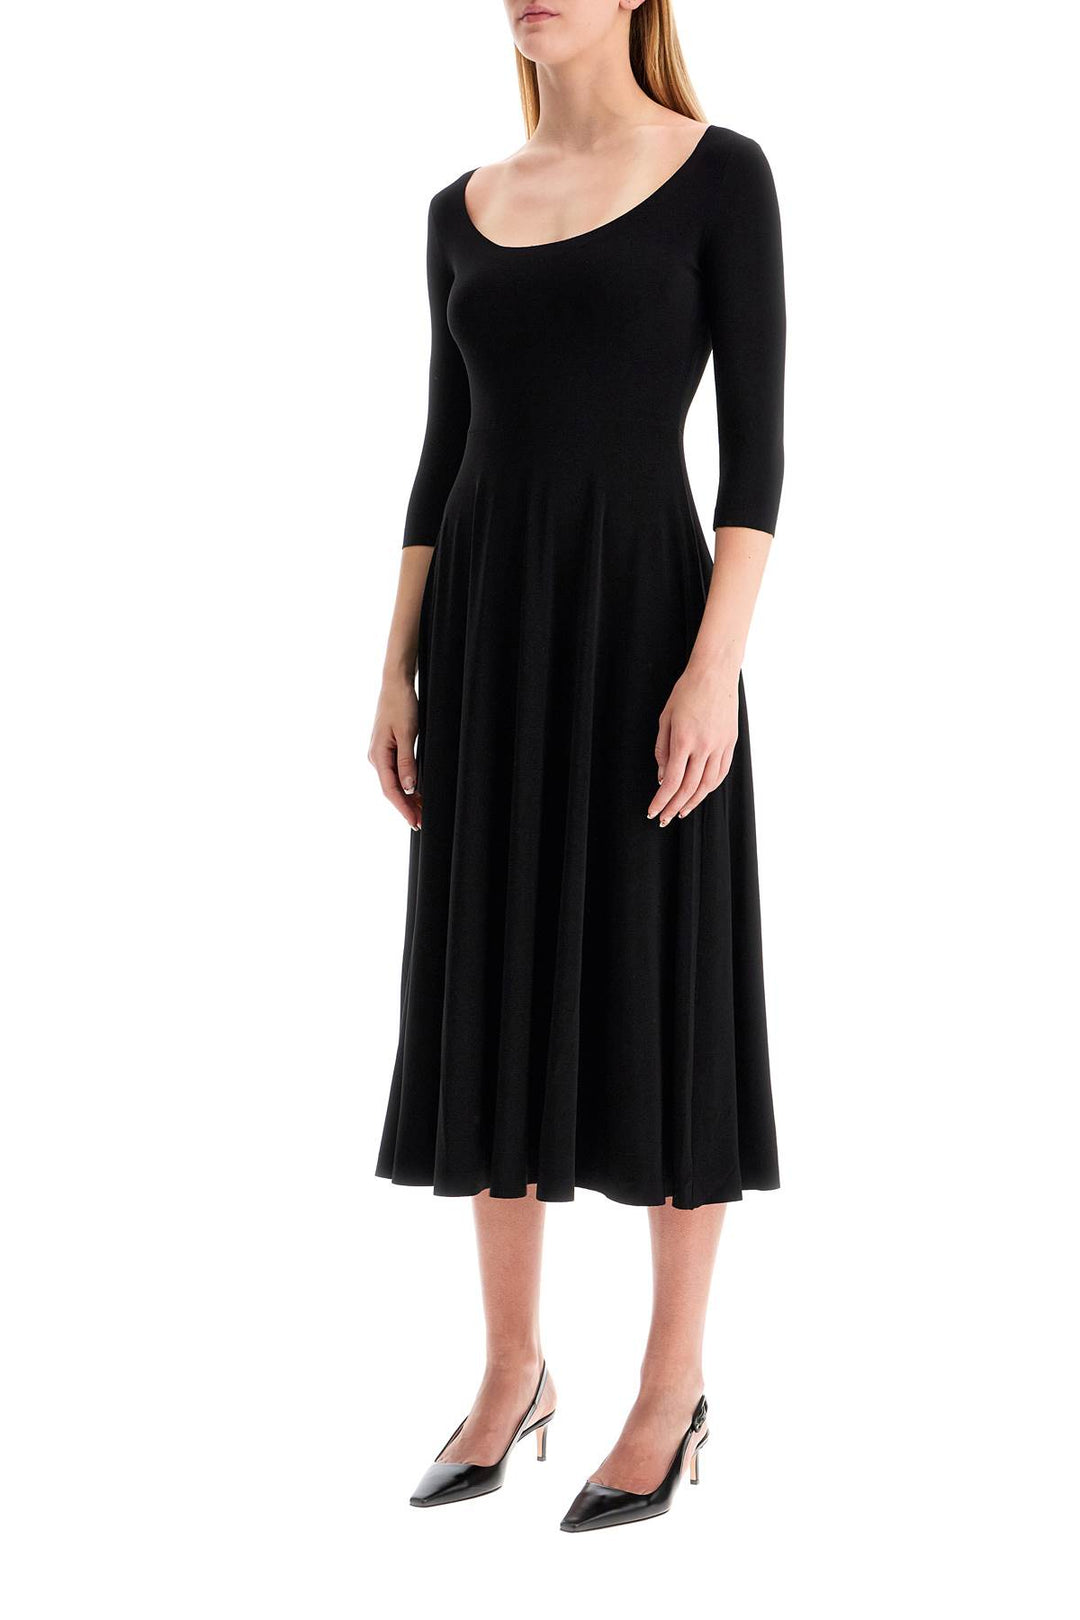 Norma Kamali Reversible V Neck Dress   Black